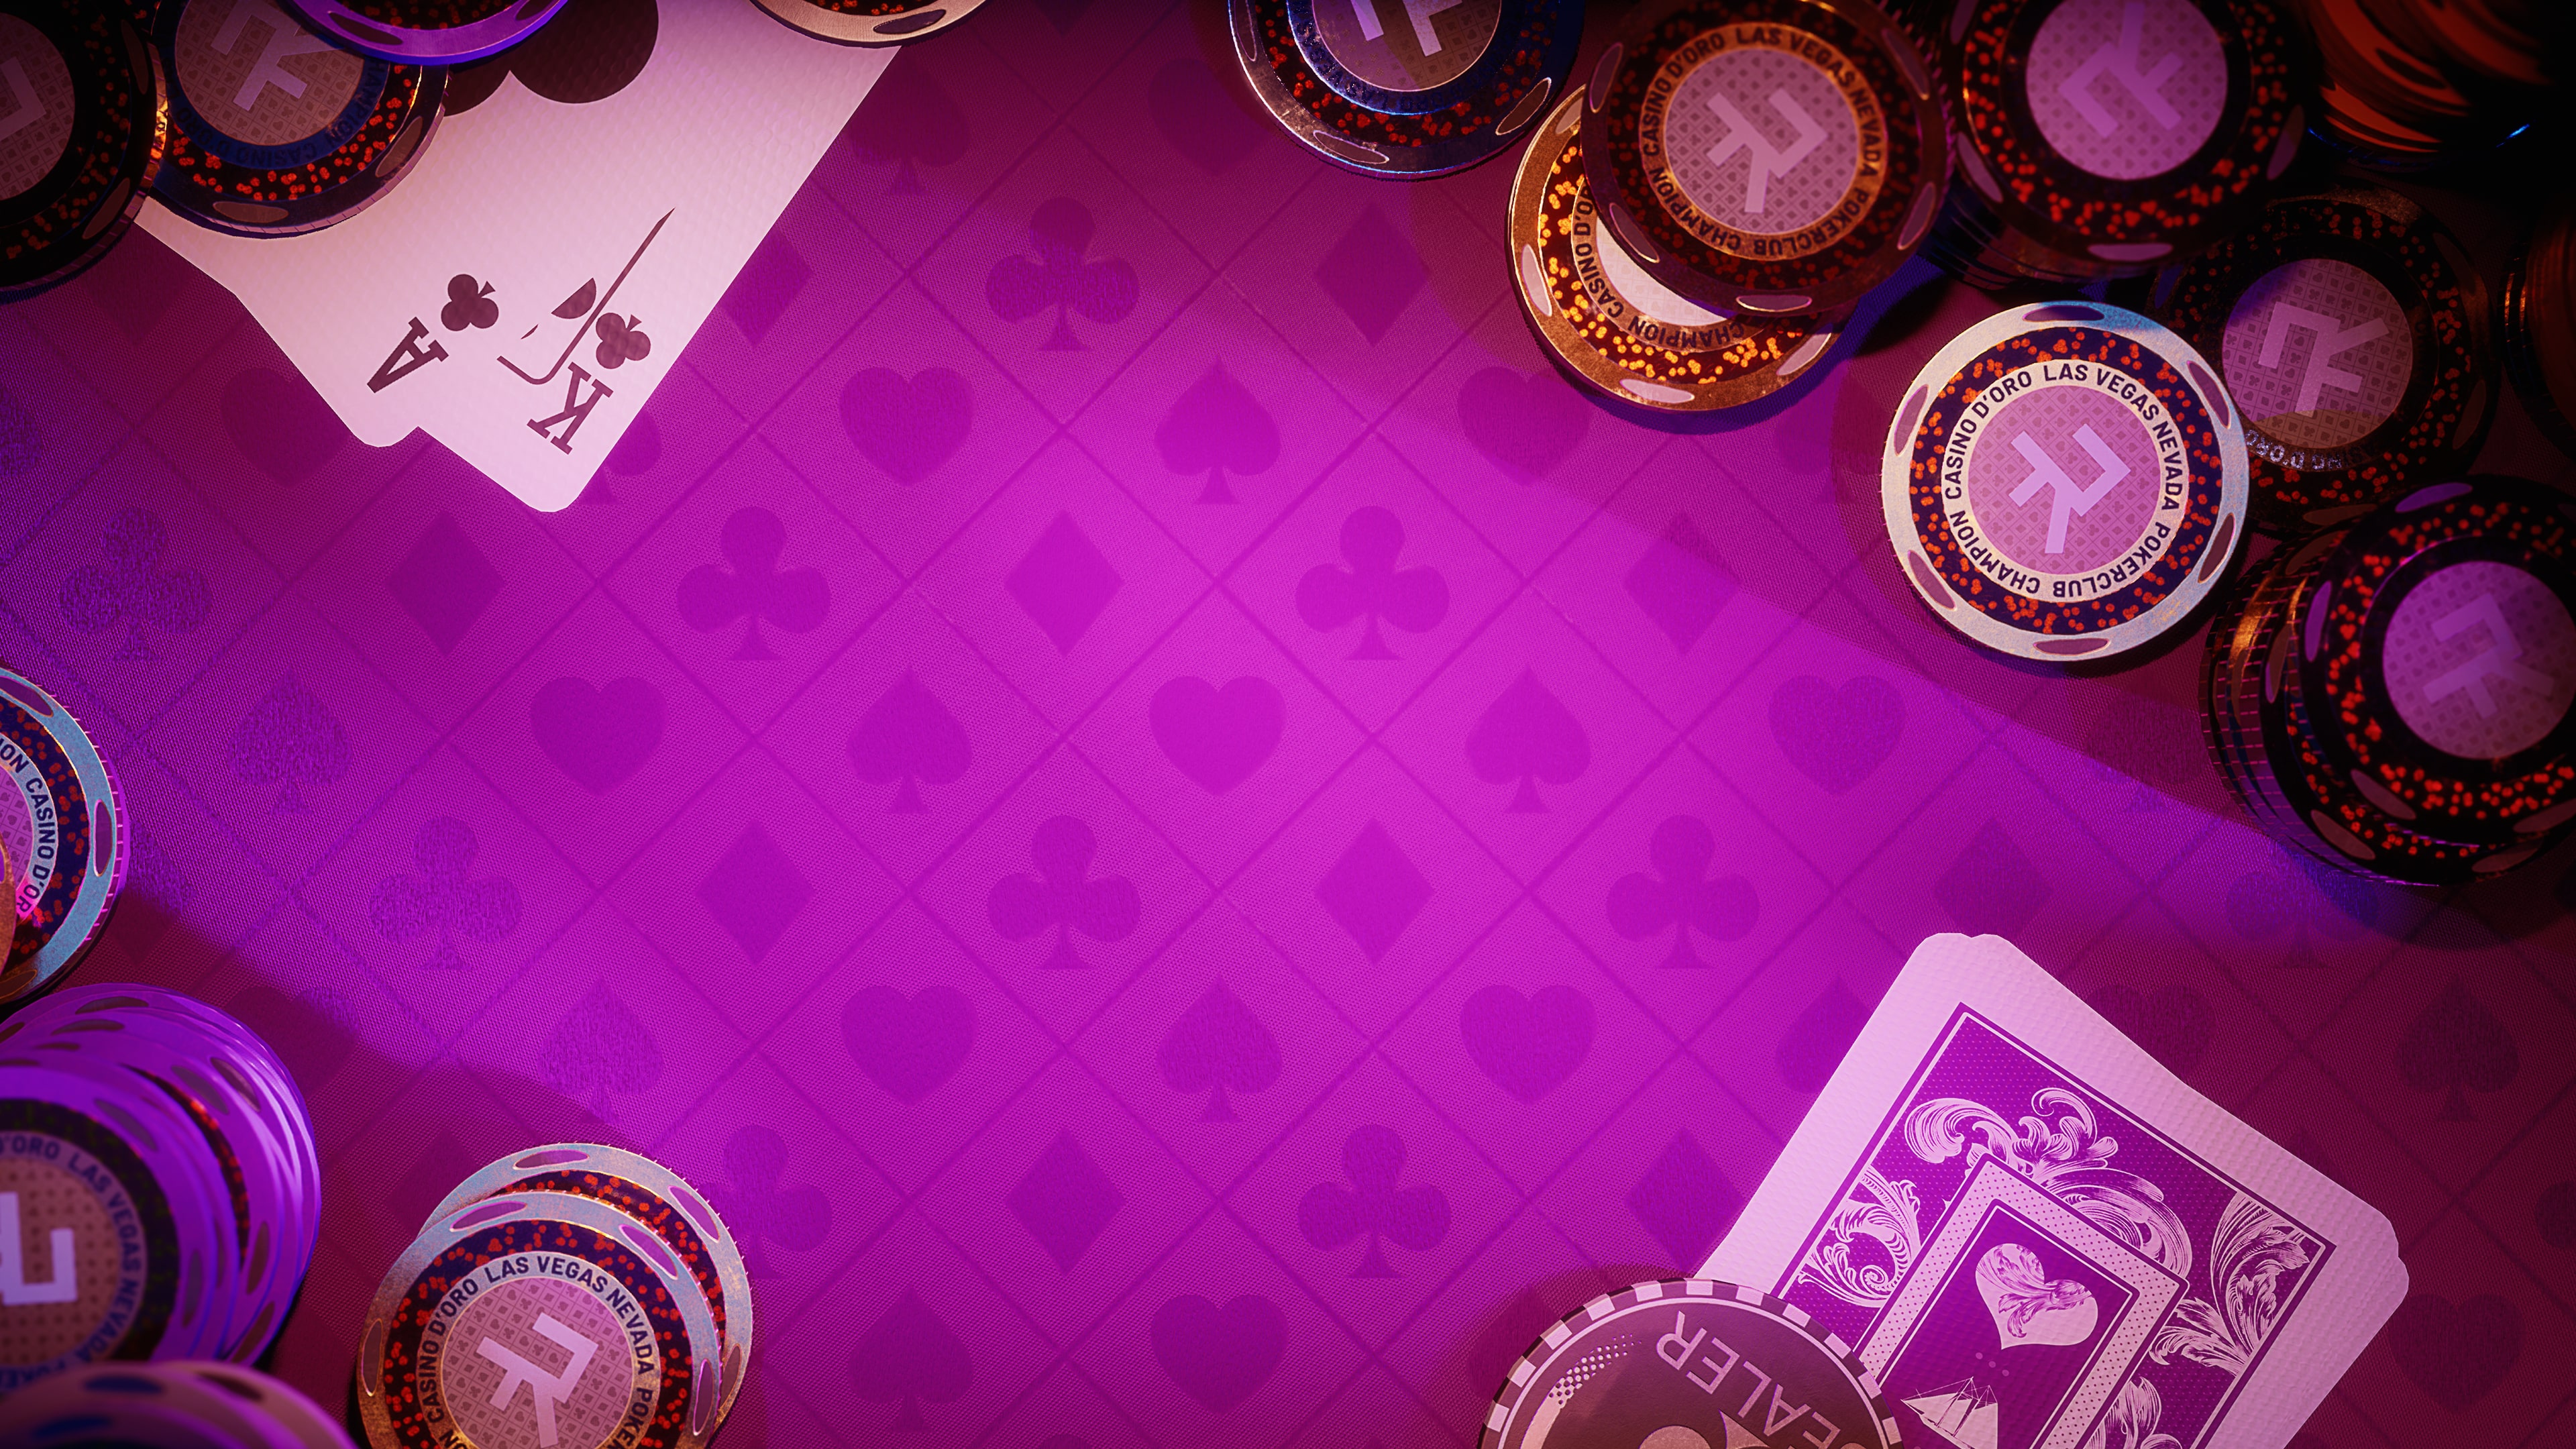 Poker Club PS4 & PS5